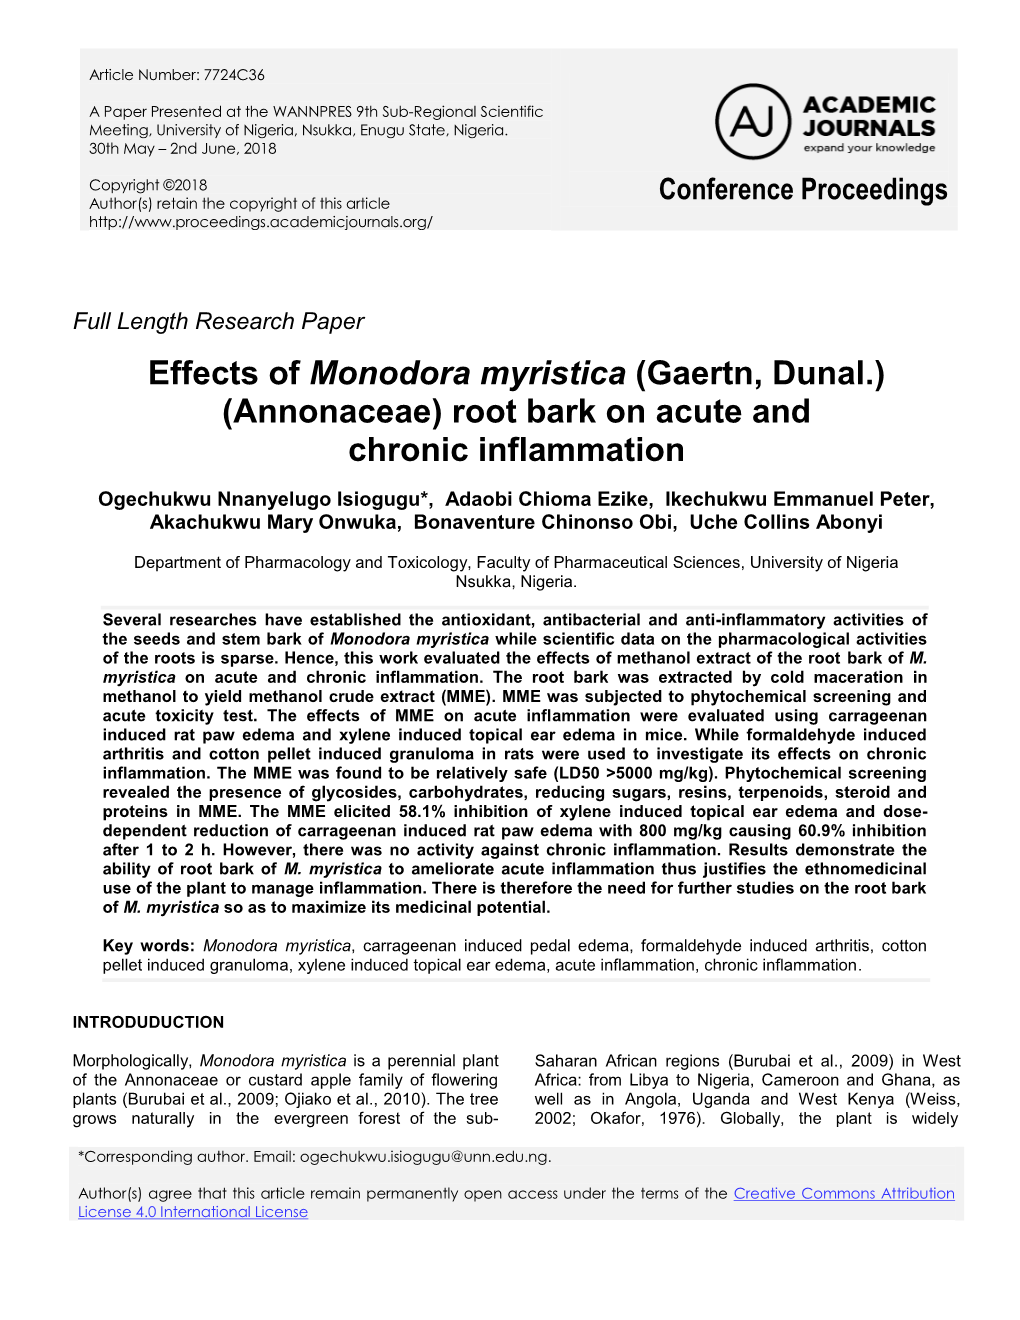 Effects of Monodora Myristica (Gaertn, Dunal.) (Annonaceae) Root Bark on Acute and Chronic Inflammation